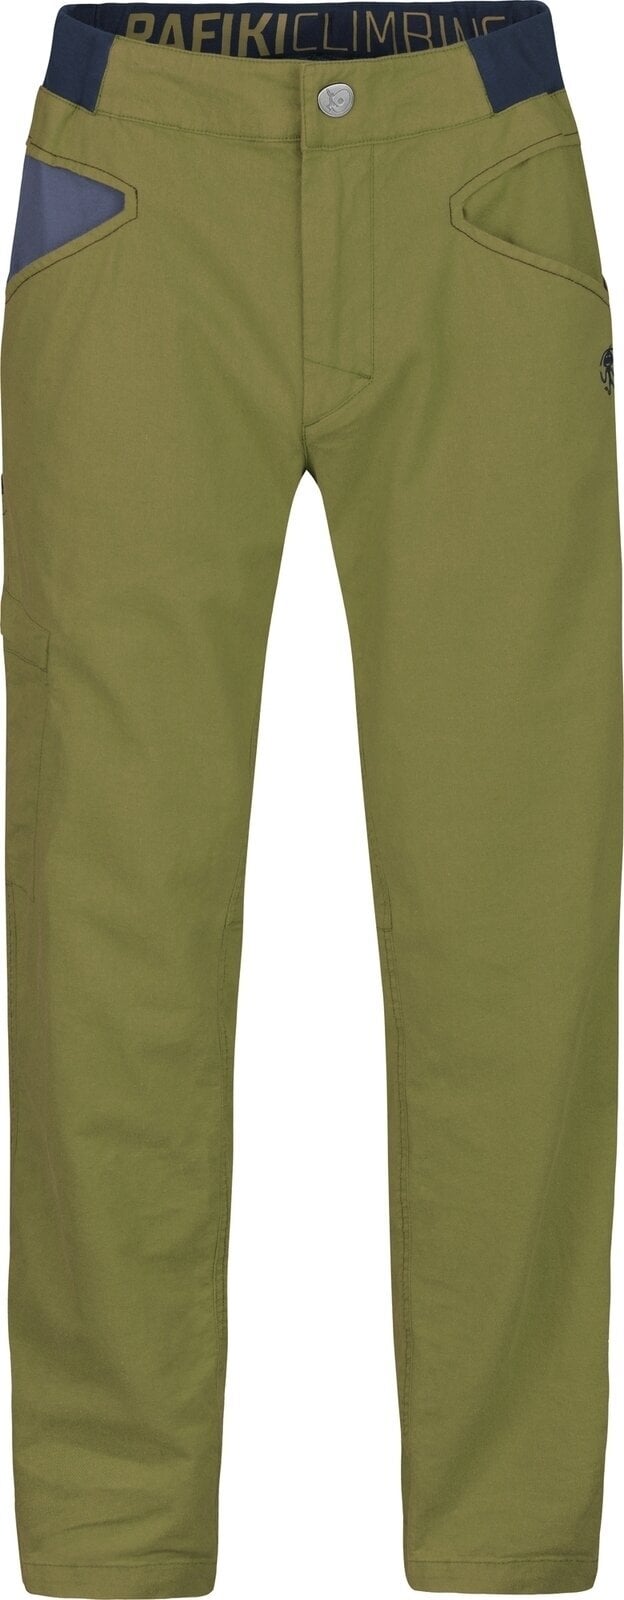 Outdoor Pants Rafiki Grip Man Pants Avocado L Outdoor Pants